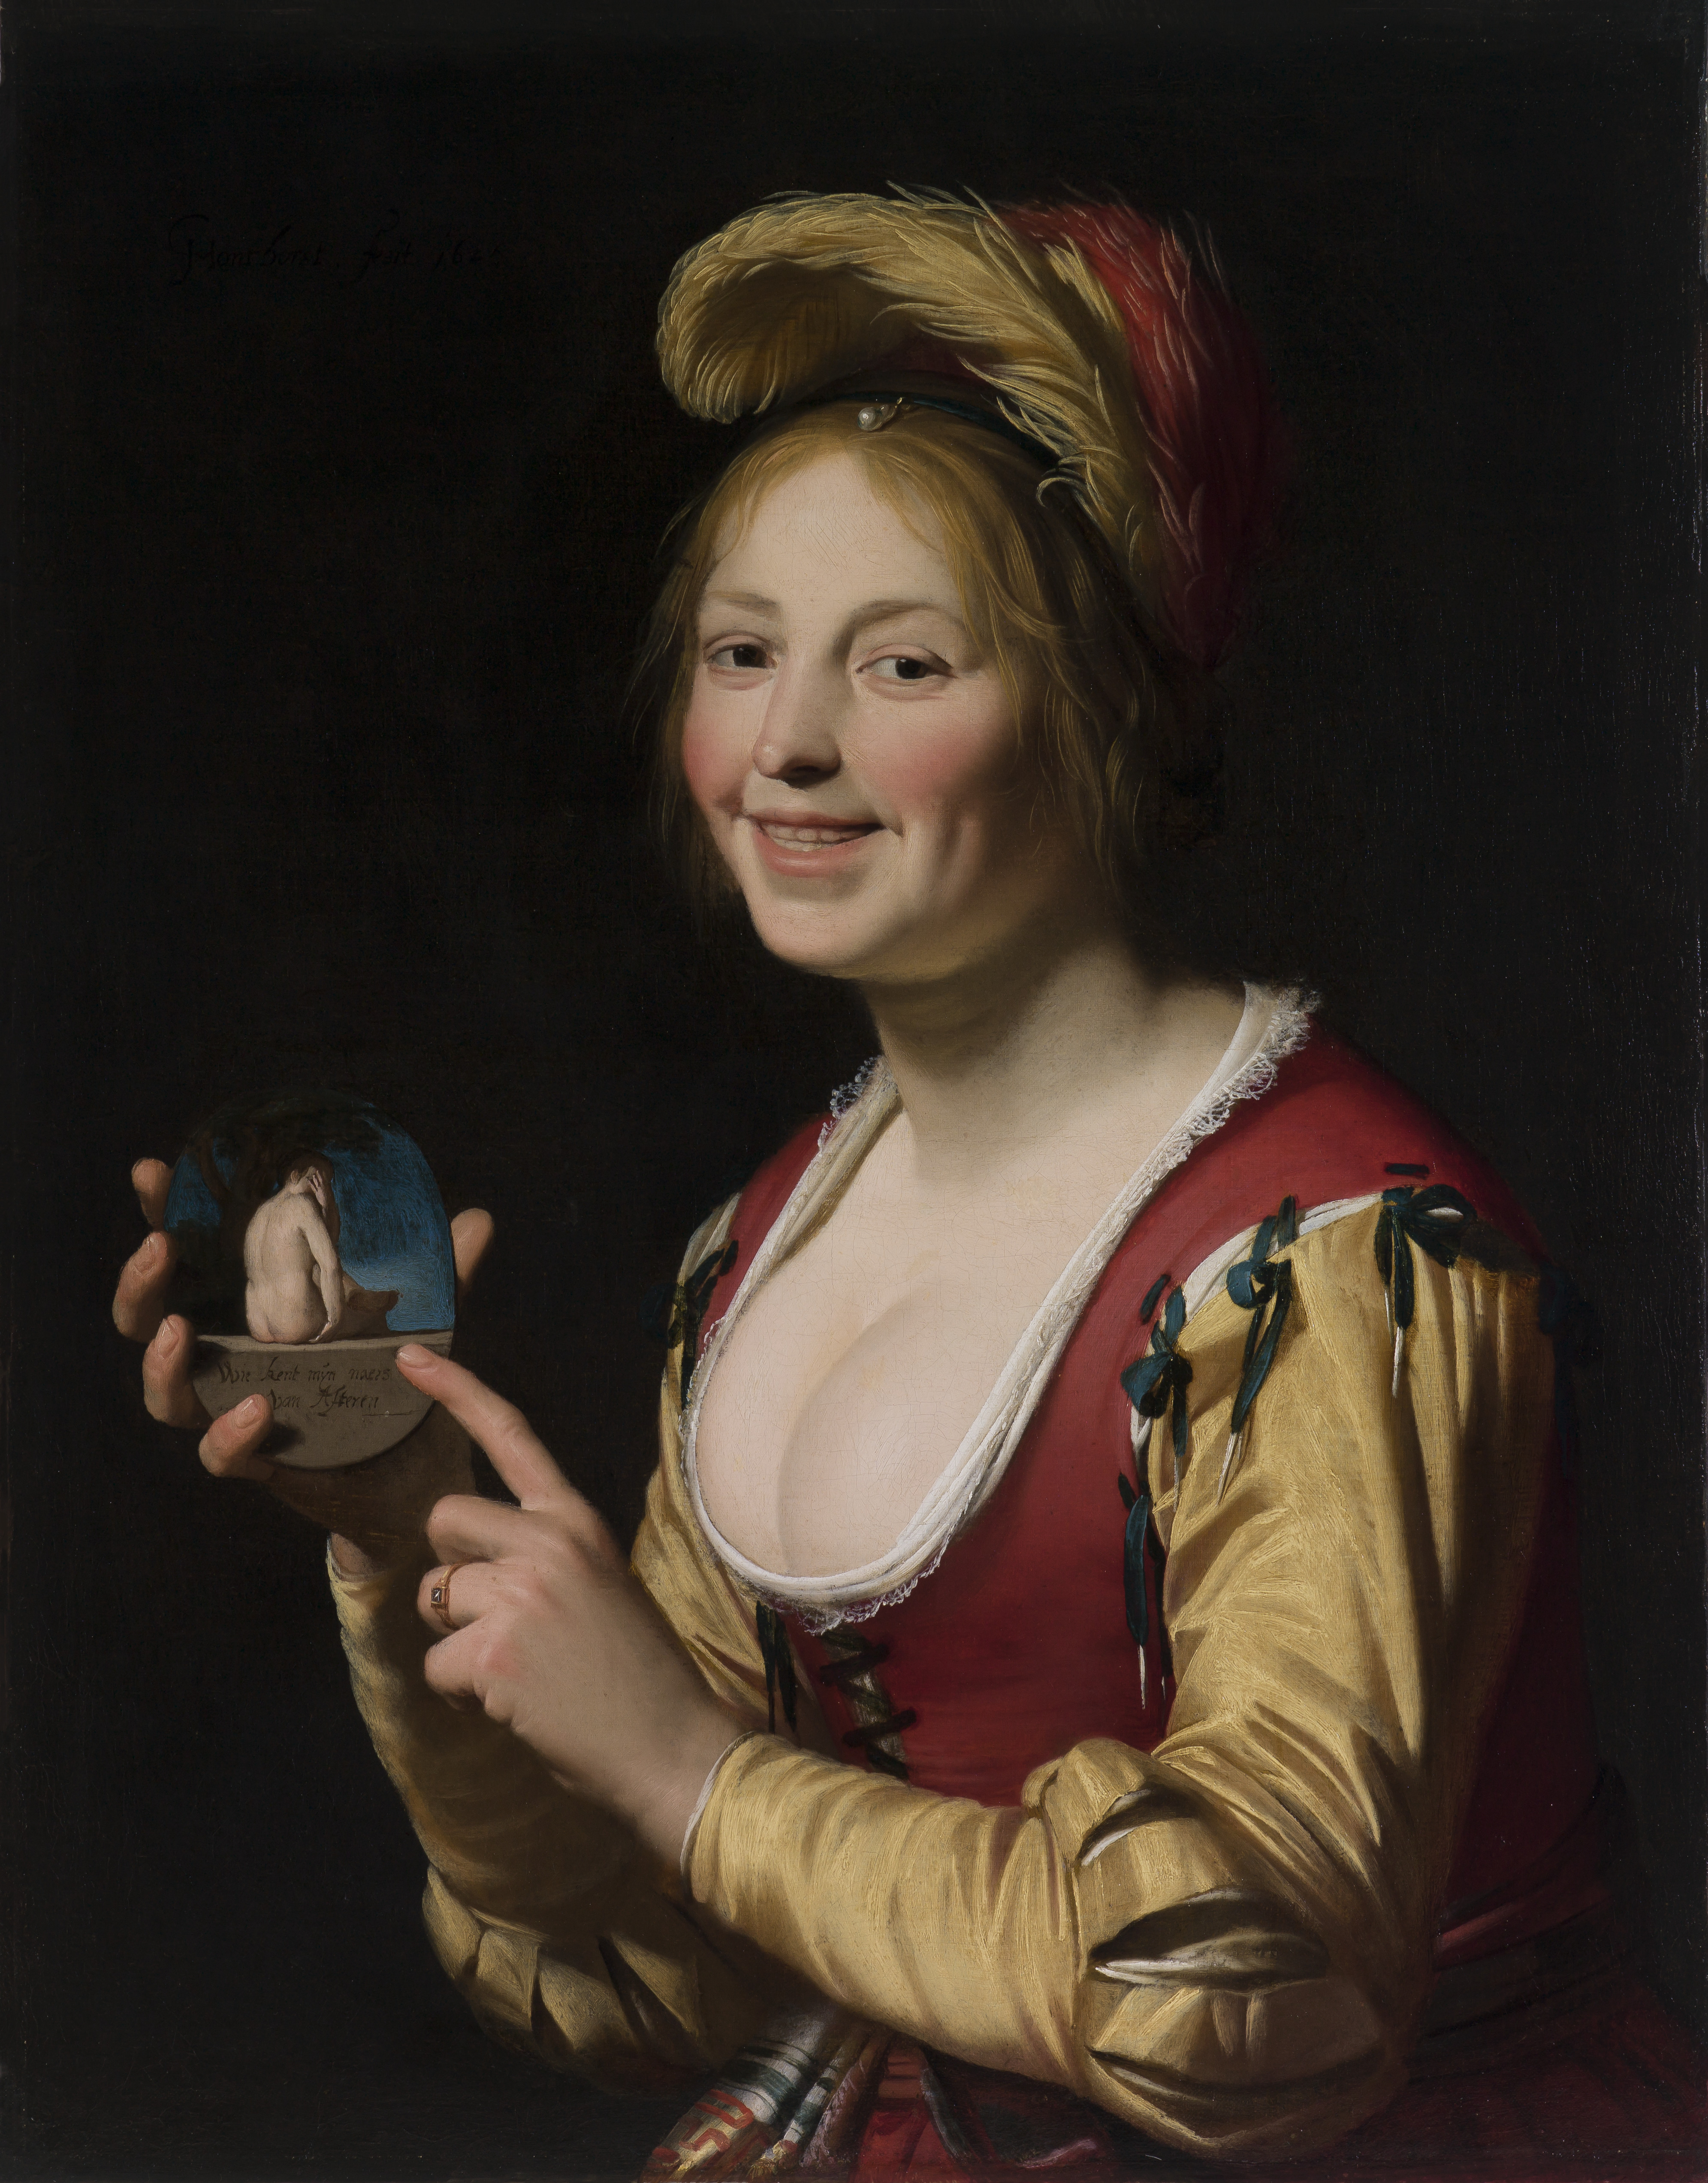 Müstehcen Bir Resim Tutarak Gülümseyen Metres (Smiling Girl, a Courtesan, Holding an Obscene Image) by Gerard van Honthorst - 1625 - 81.3 x 64.1 cm 